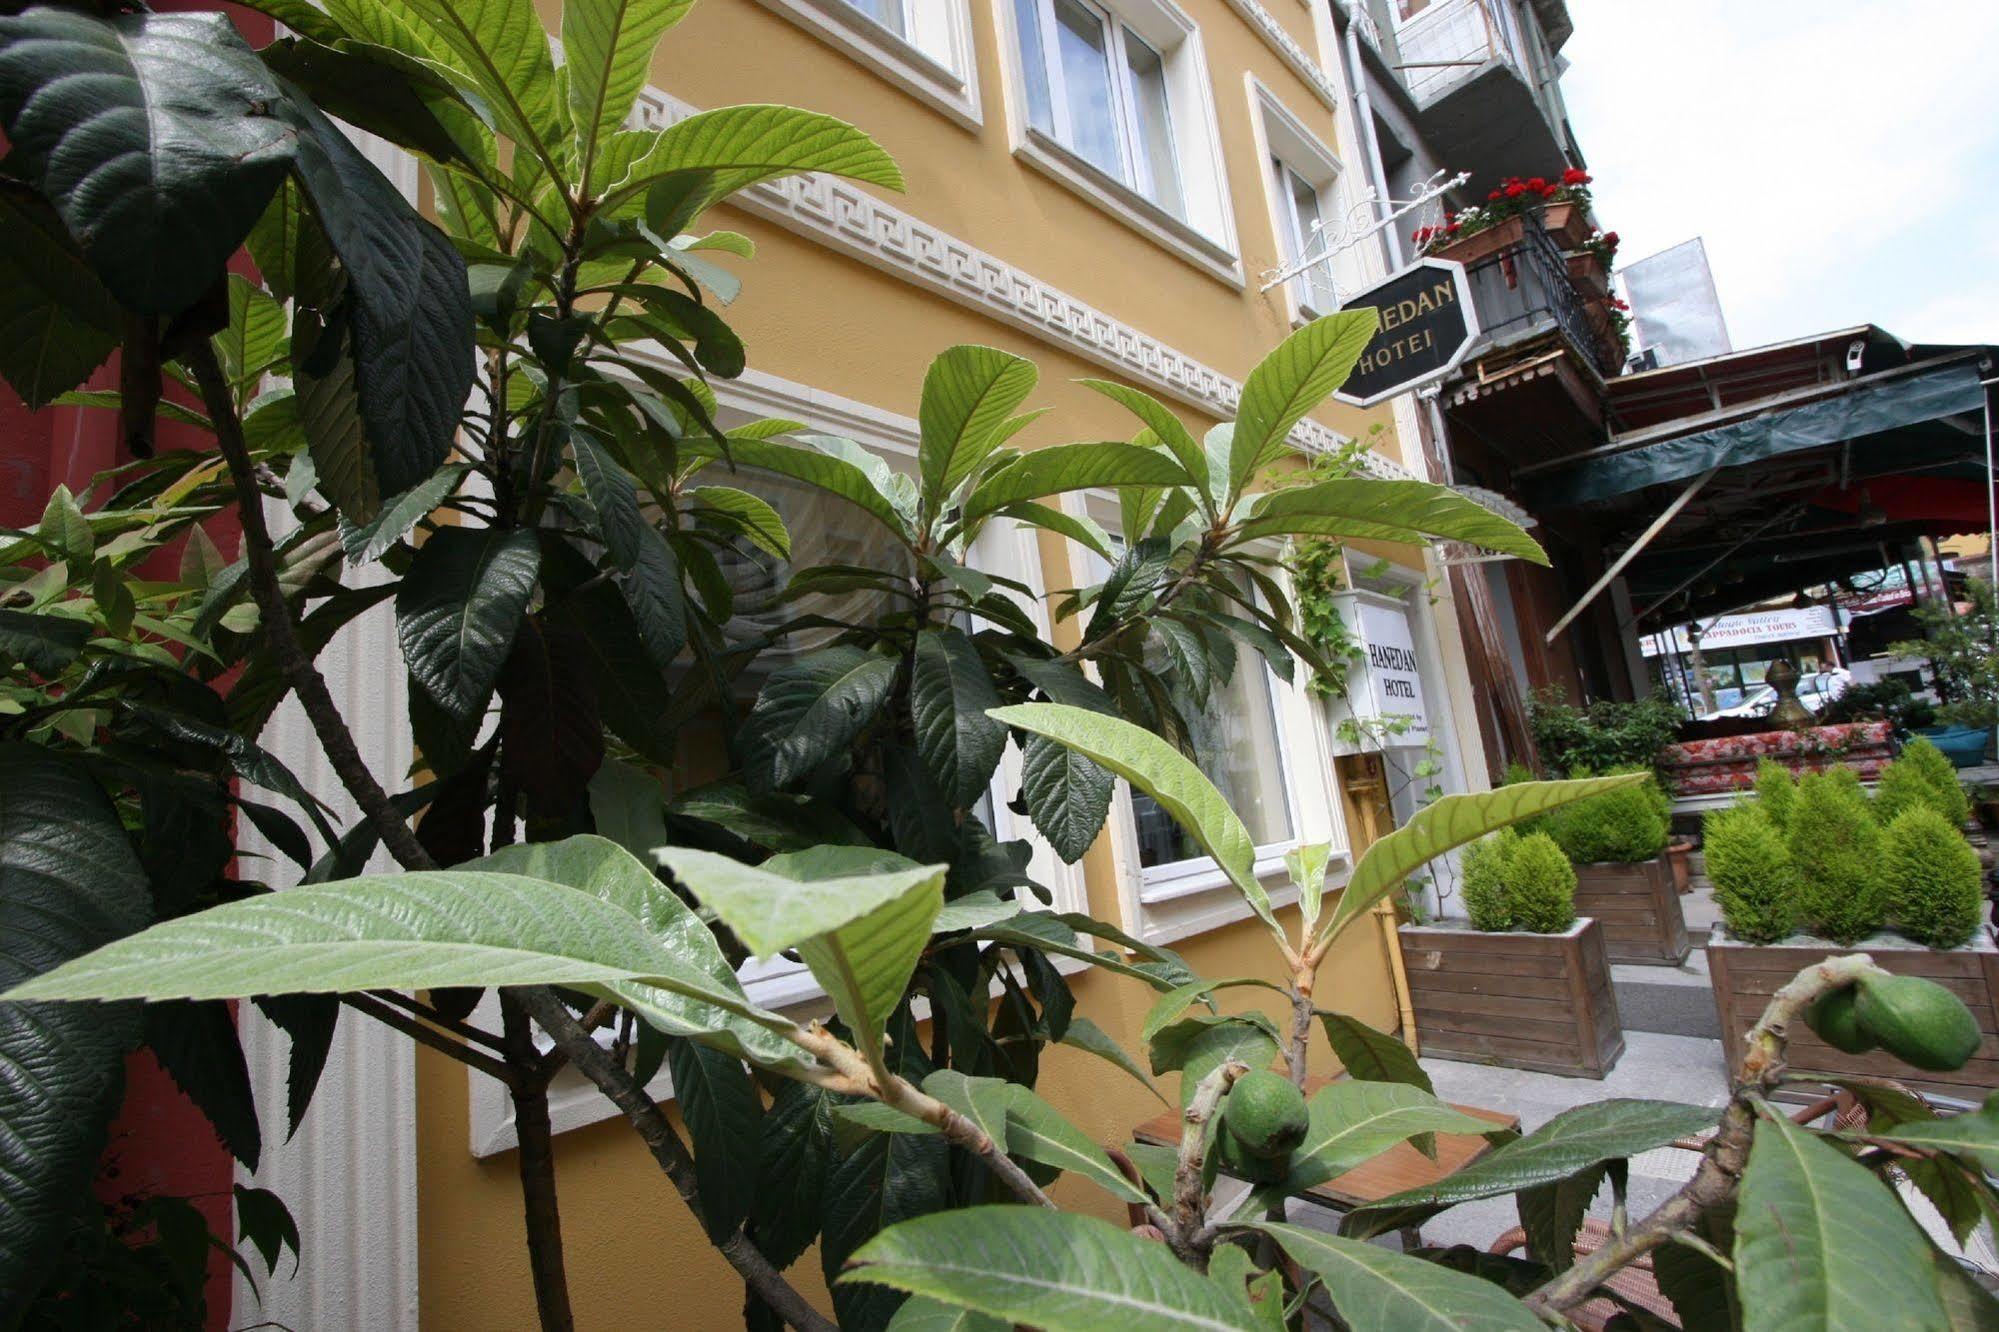 Hanedan Hotel Istanbul Exterior photo